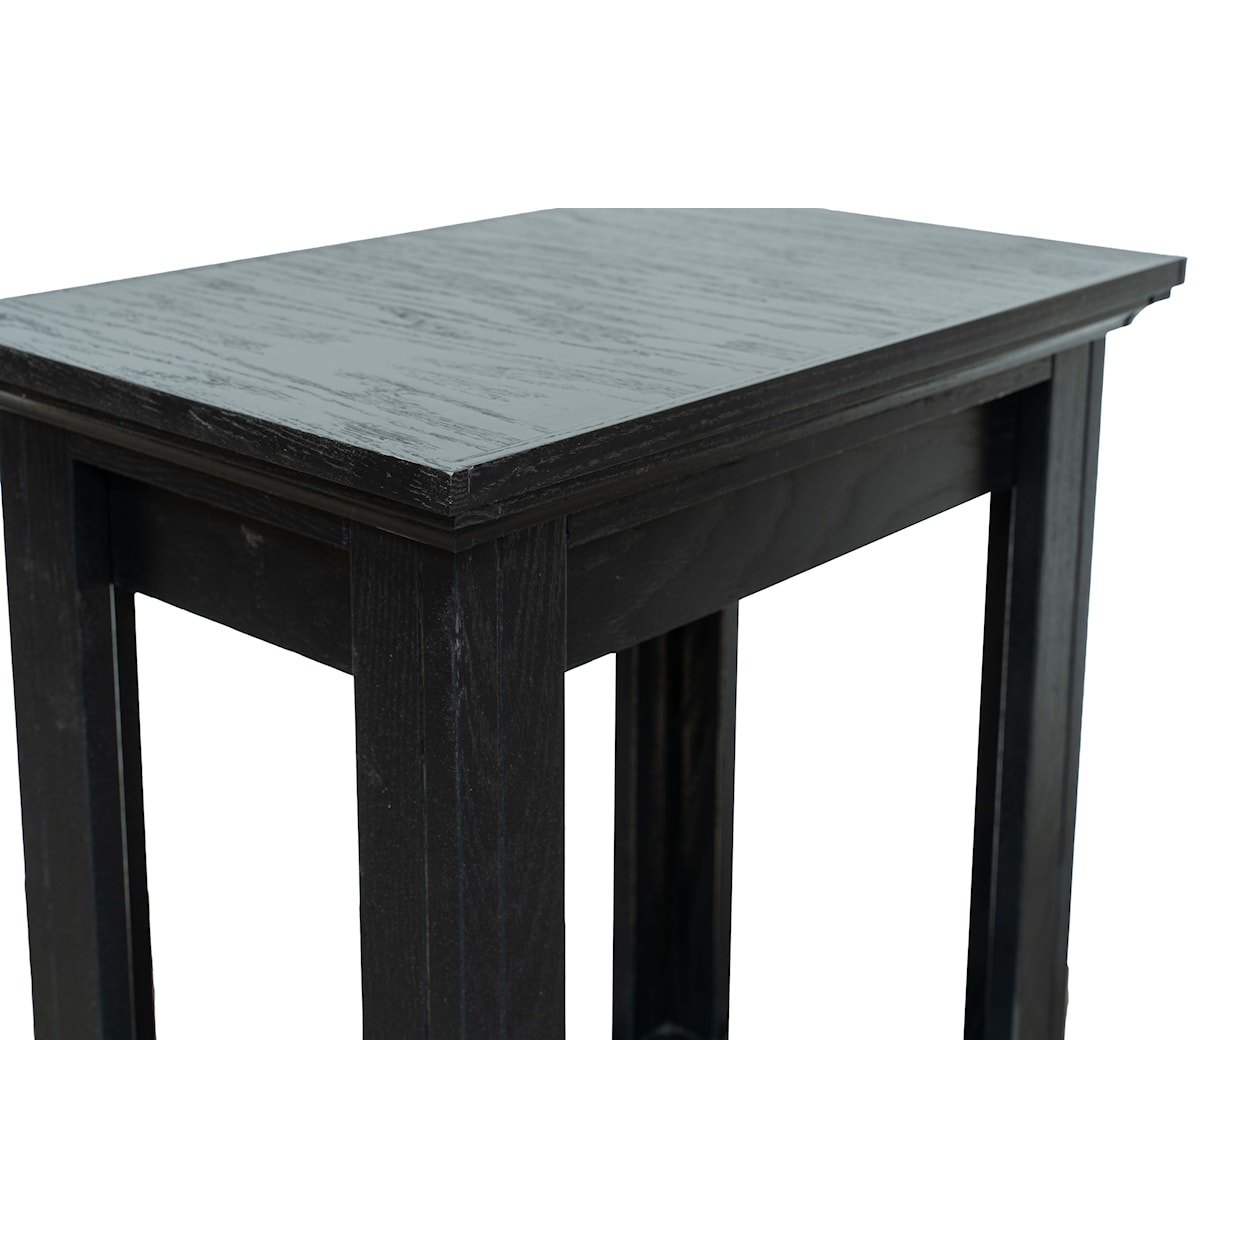 Legends Furniture Topanga 1-Shelf Chairside Table